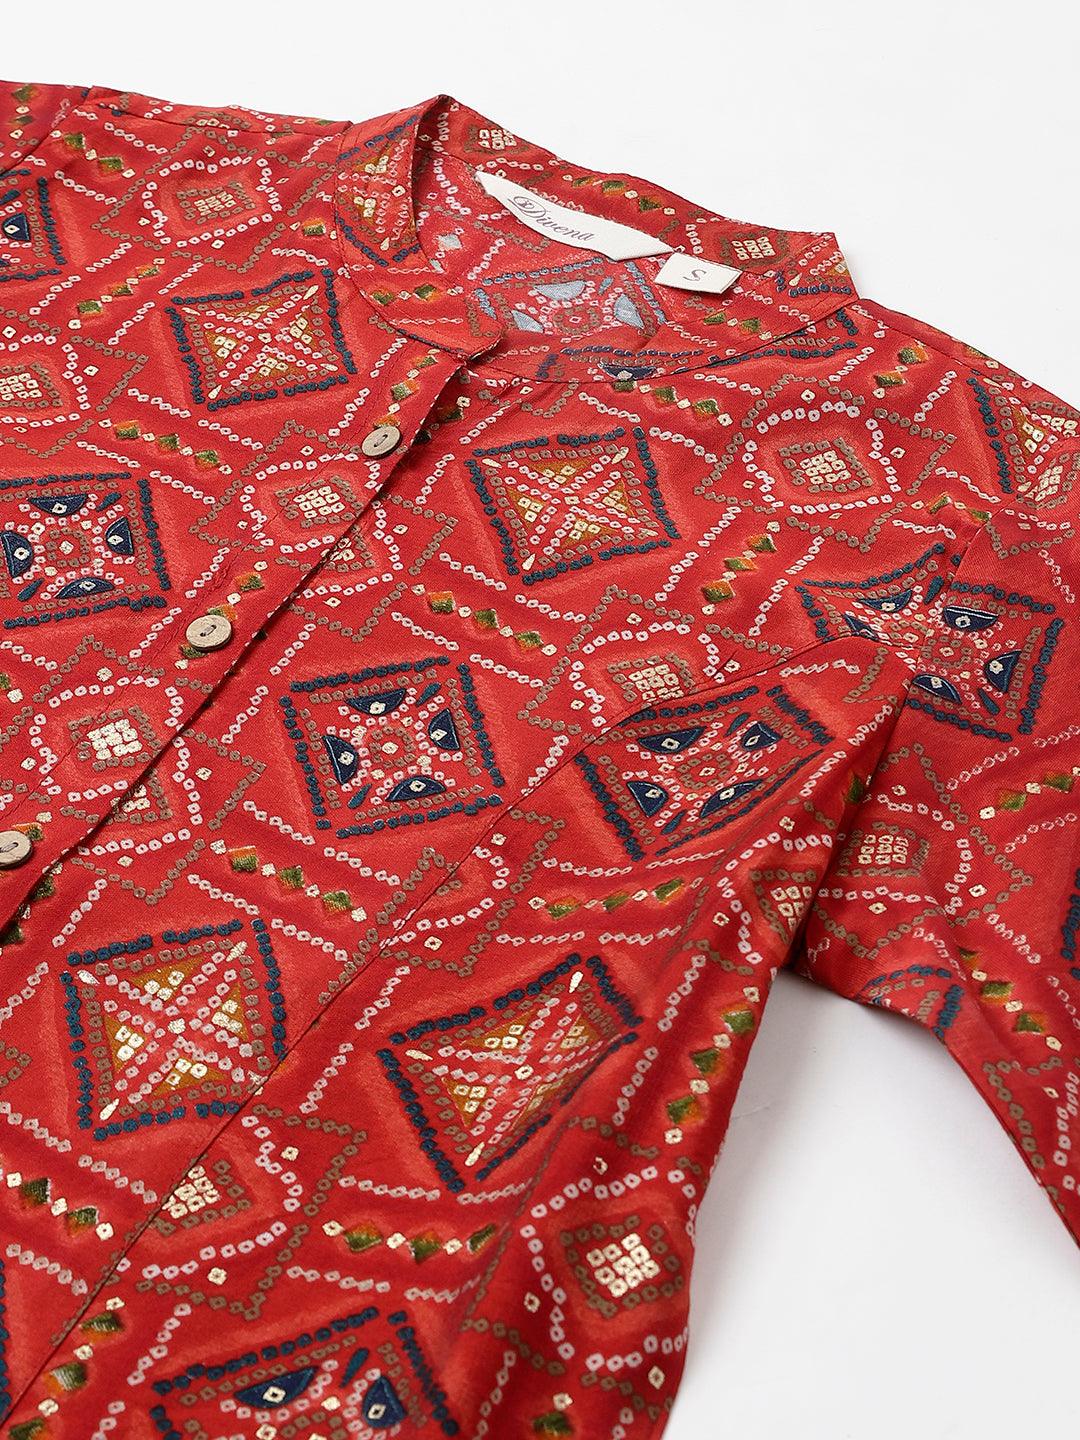 Divena Red Bandhani Printed Modal A-Line Shirts Style Top - divena world